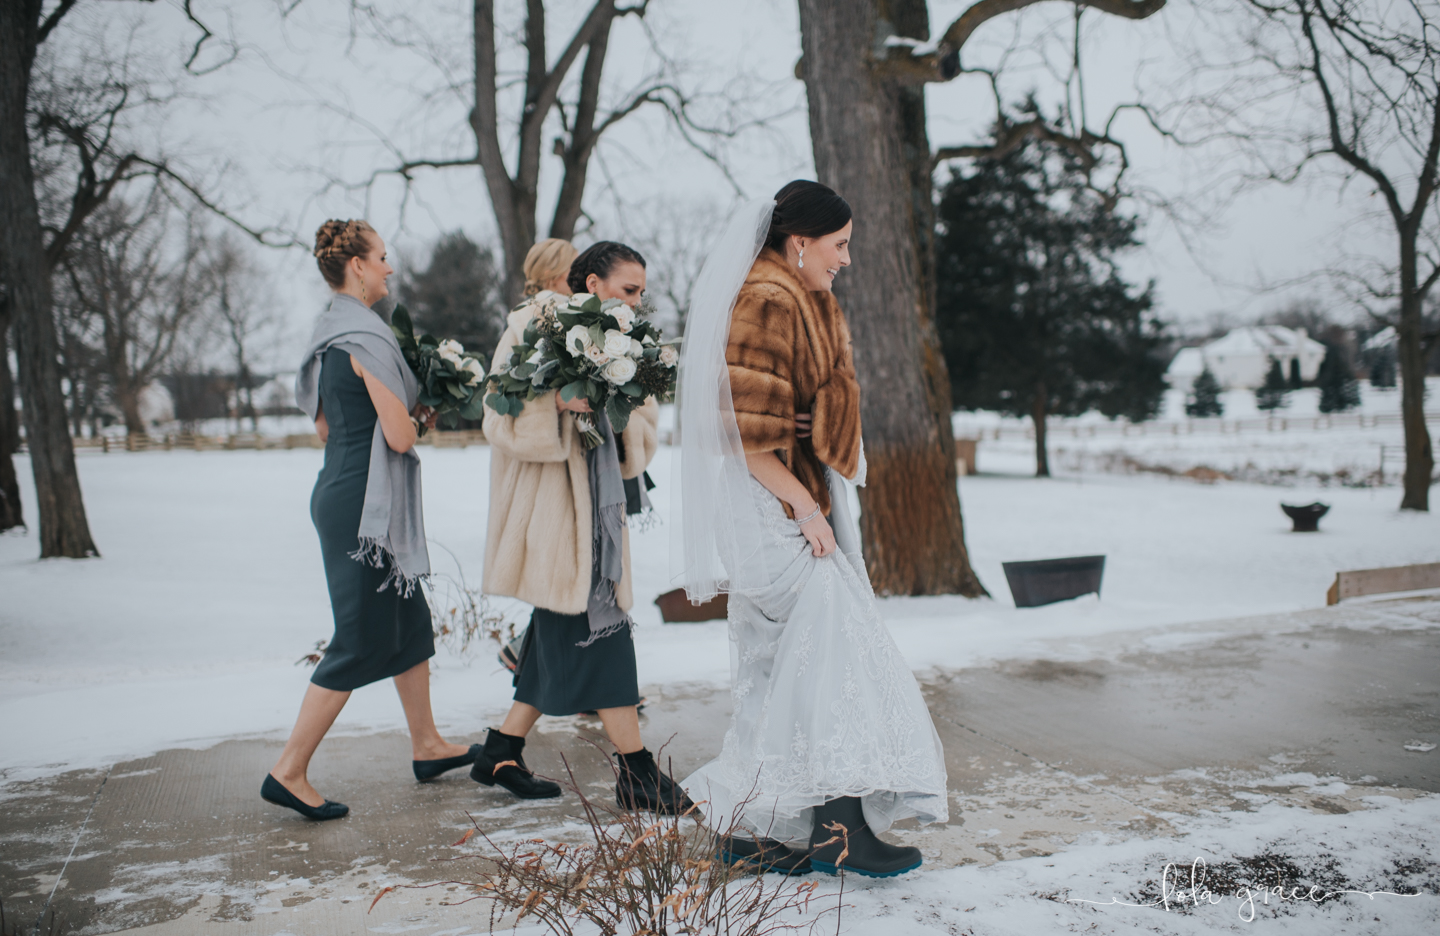 lola-grace-photography-michigan-winter-wedding-cornman-farms-54.jpg